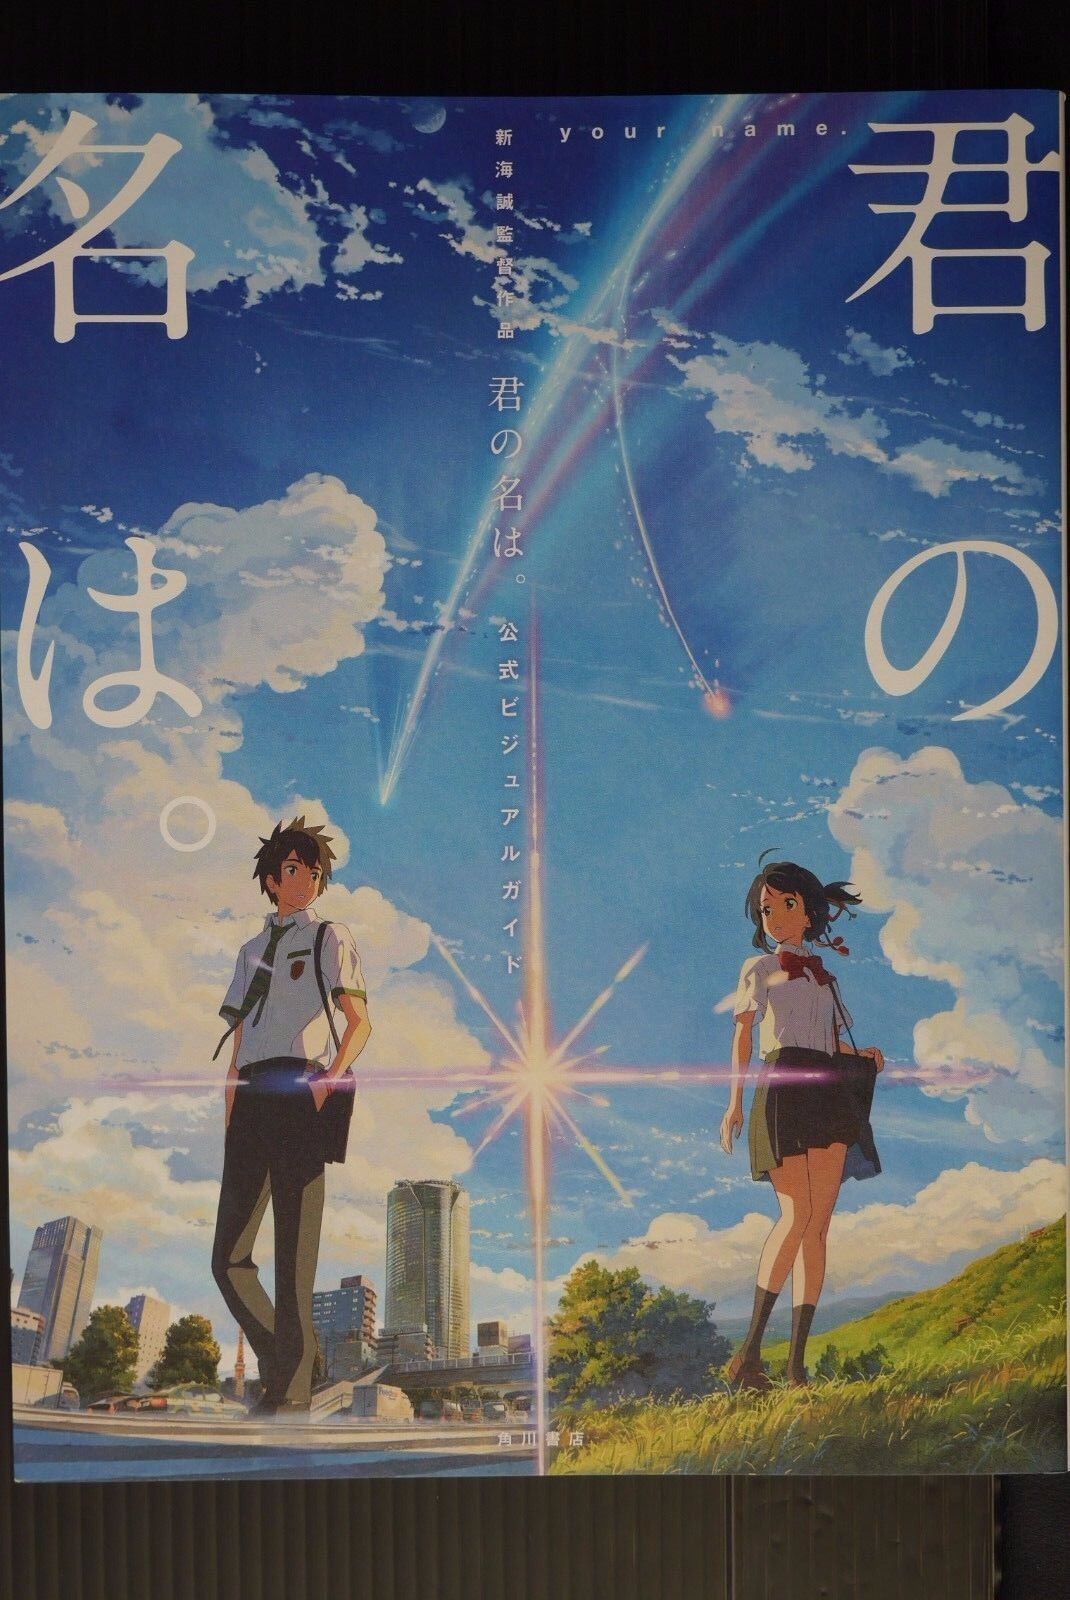 Your Name / Kimi no Na wa Official Visual Guide Book by Makoto Shinkai, JAPAN